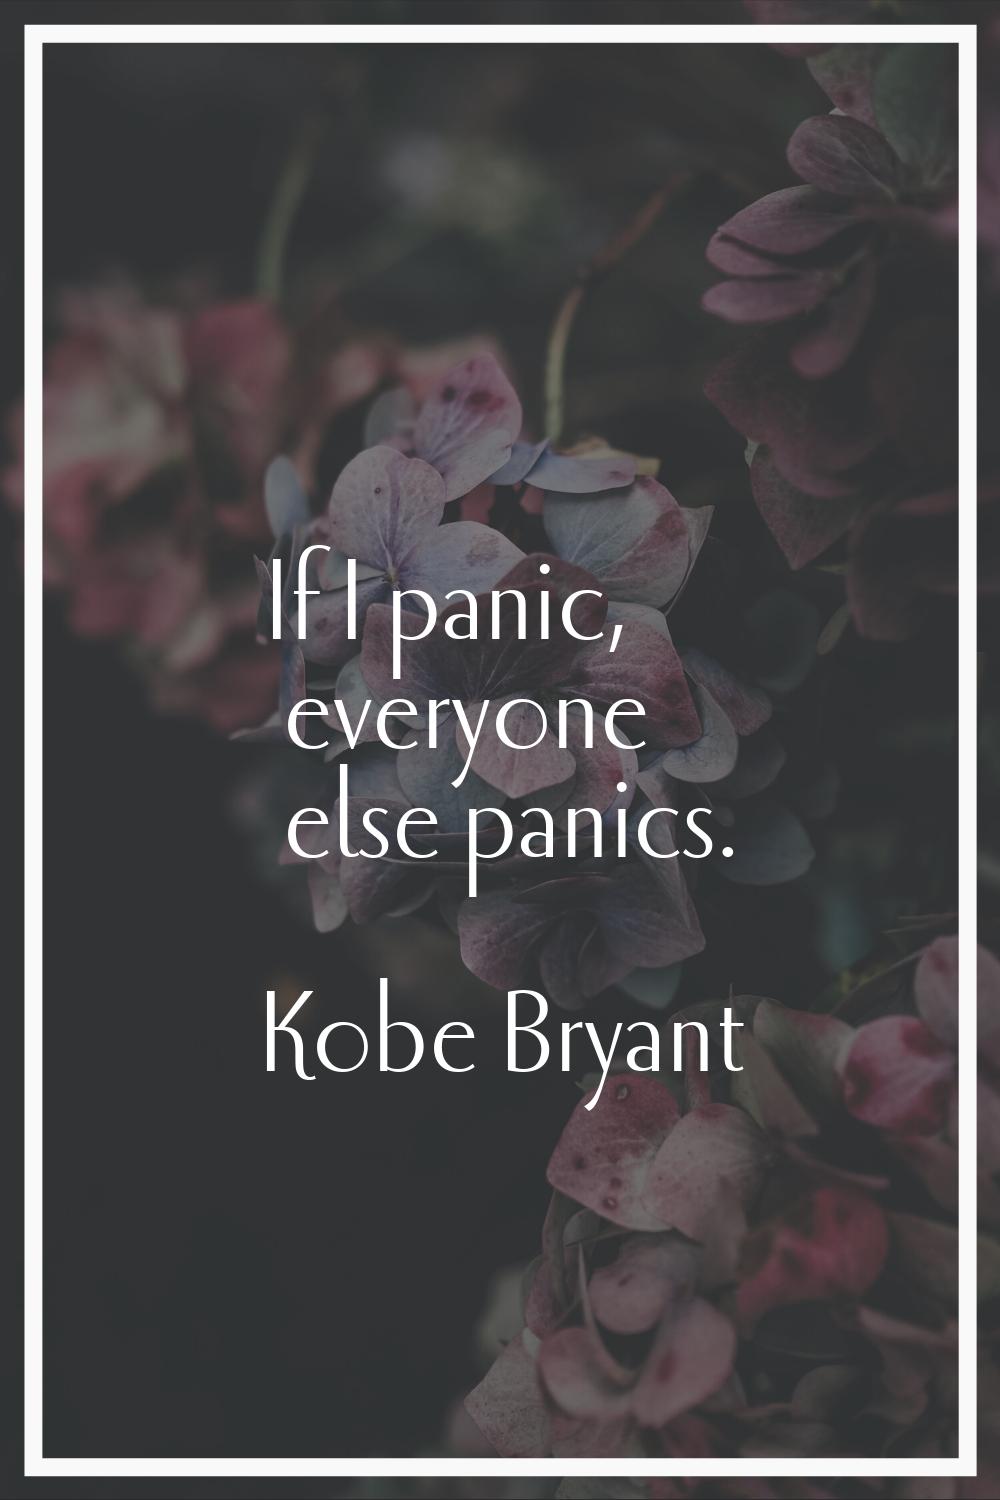 If I panic, everyone else panics.